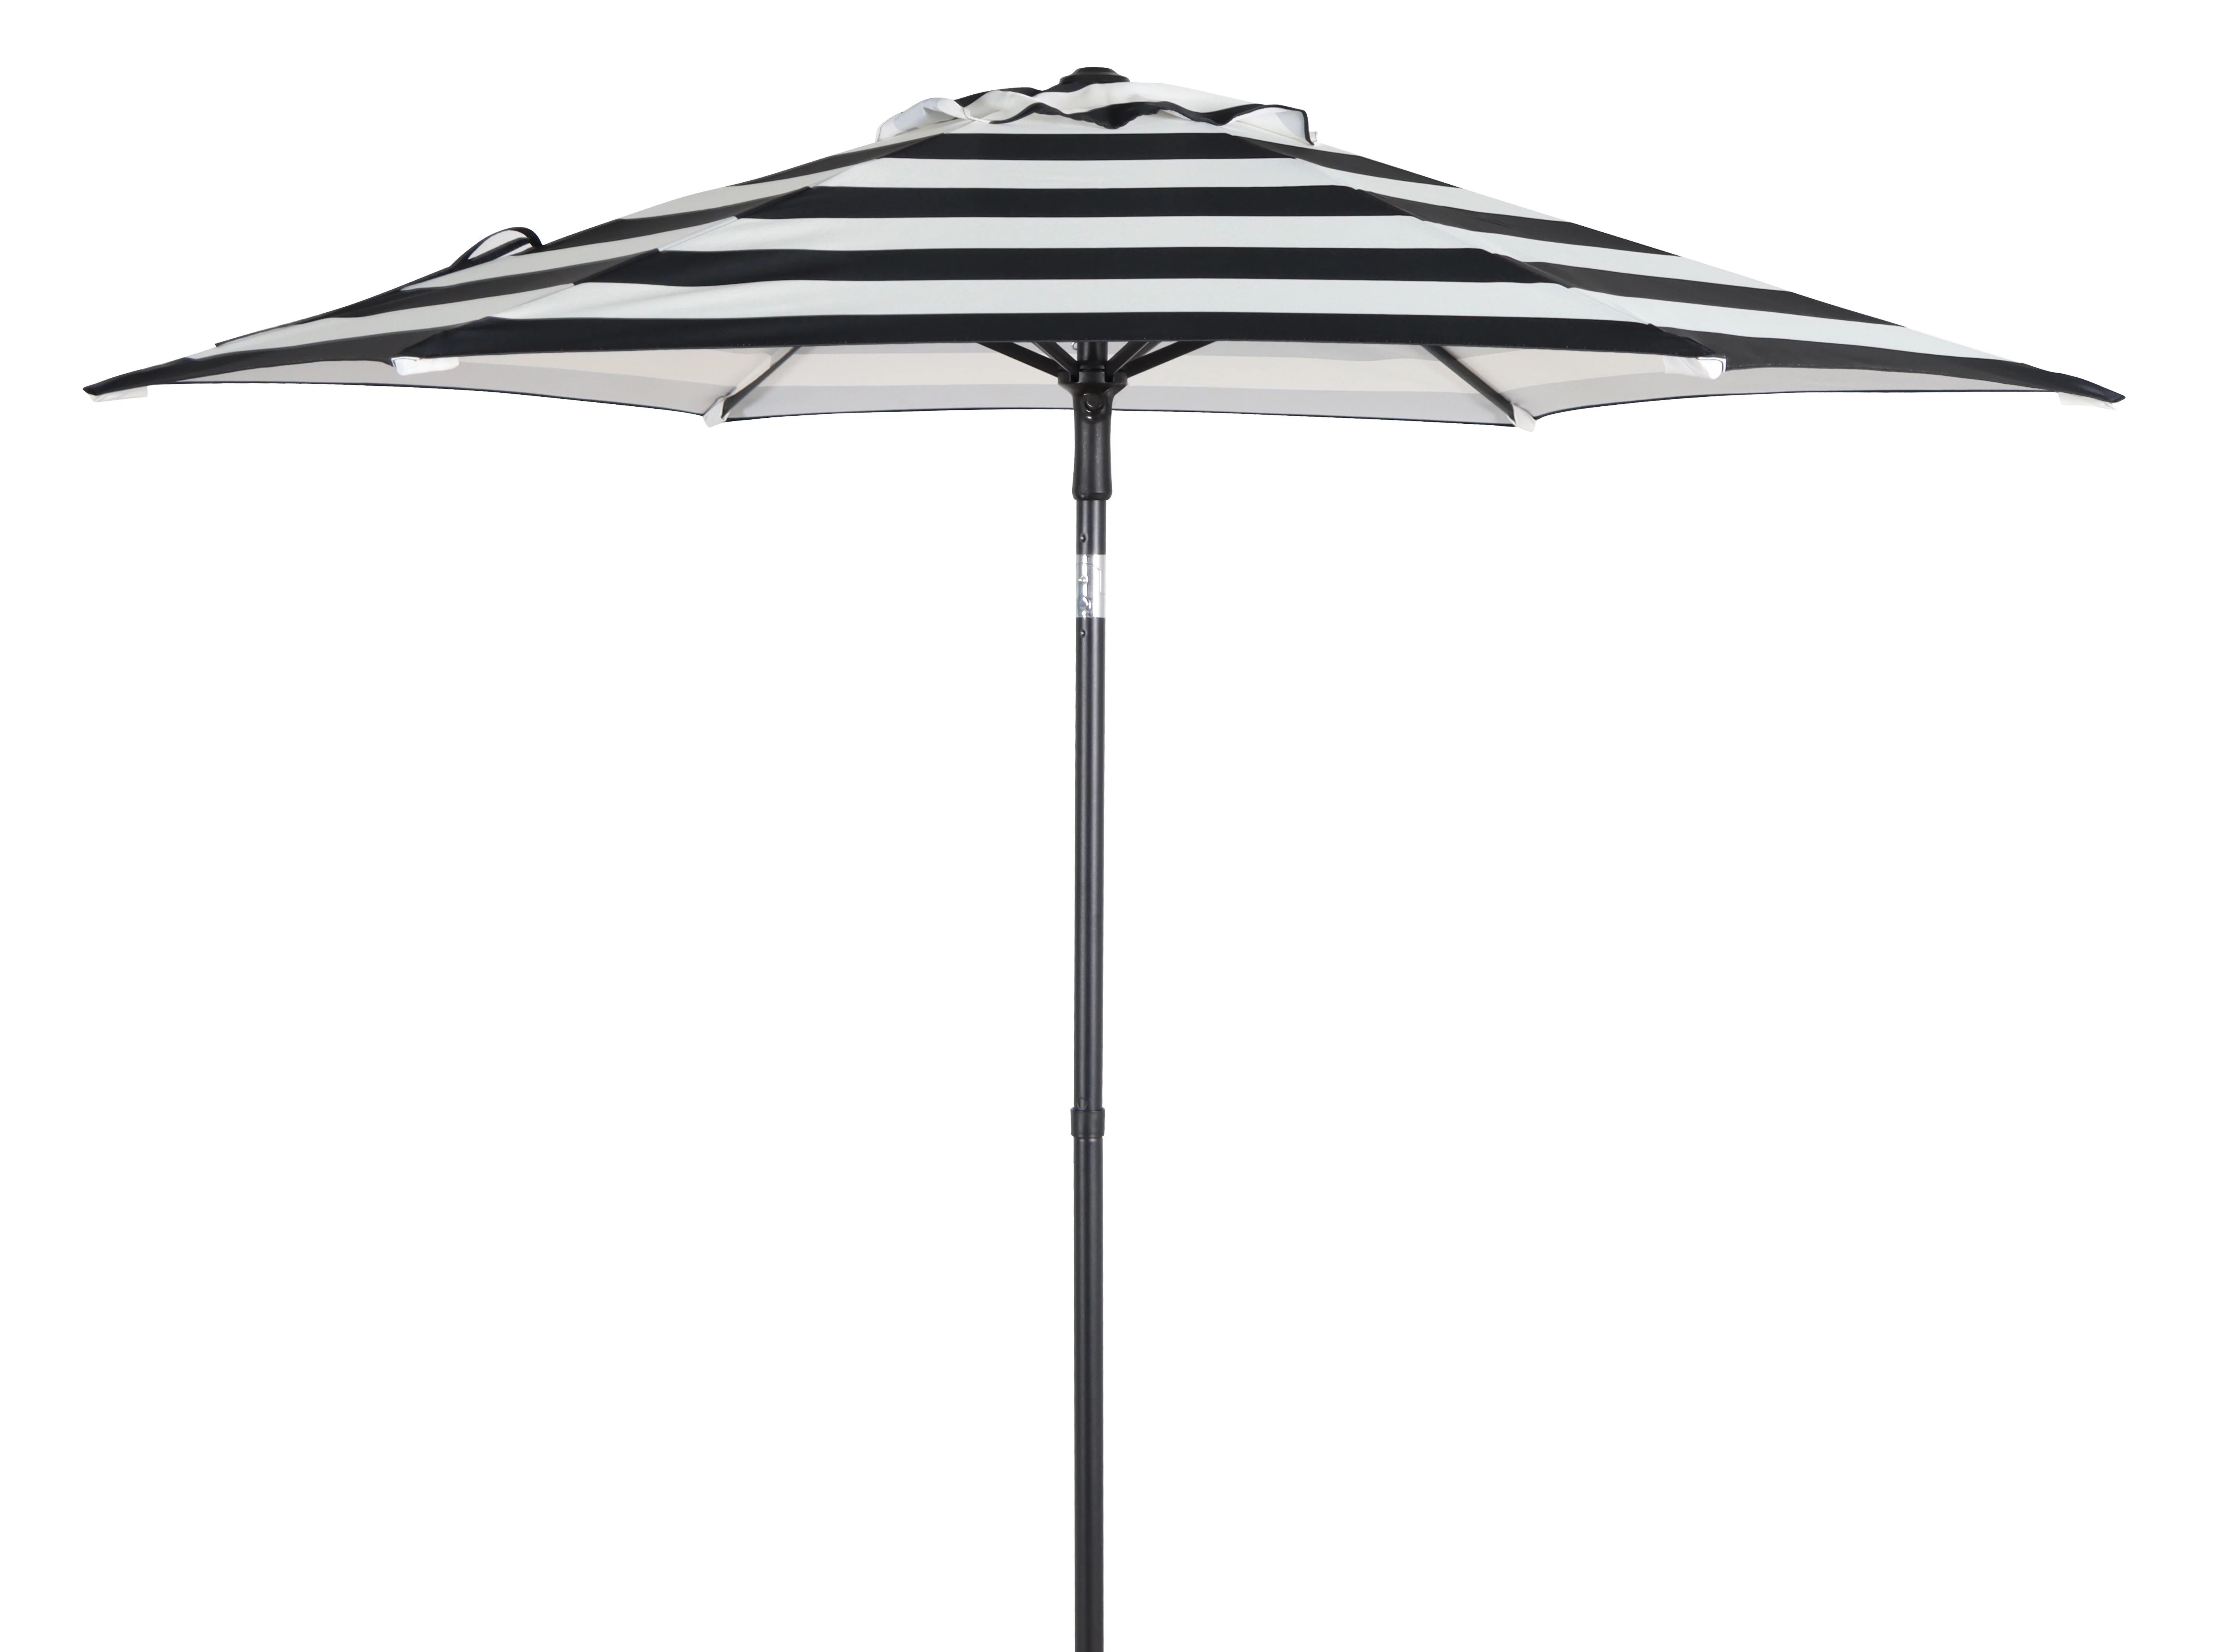 Mainstays 7.5 Foot Push-Up Round Market Umbrella Black & White Cabana Stripe | Walmart (US)